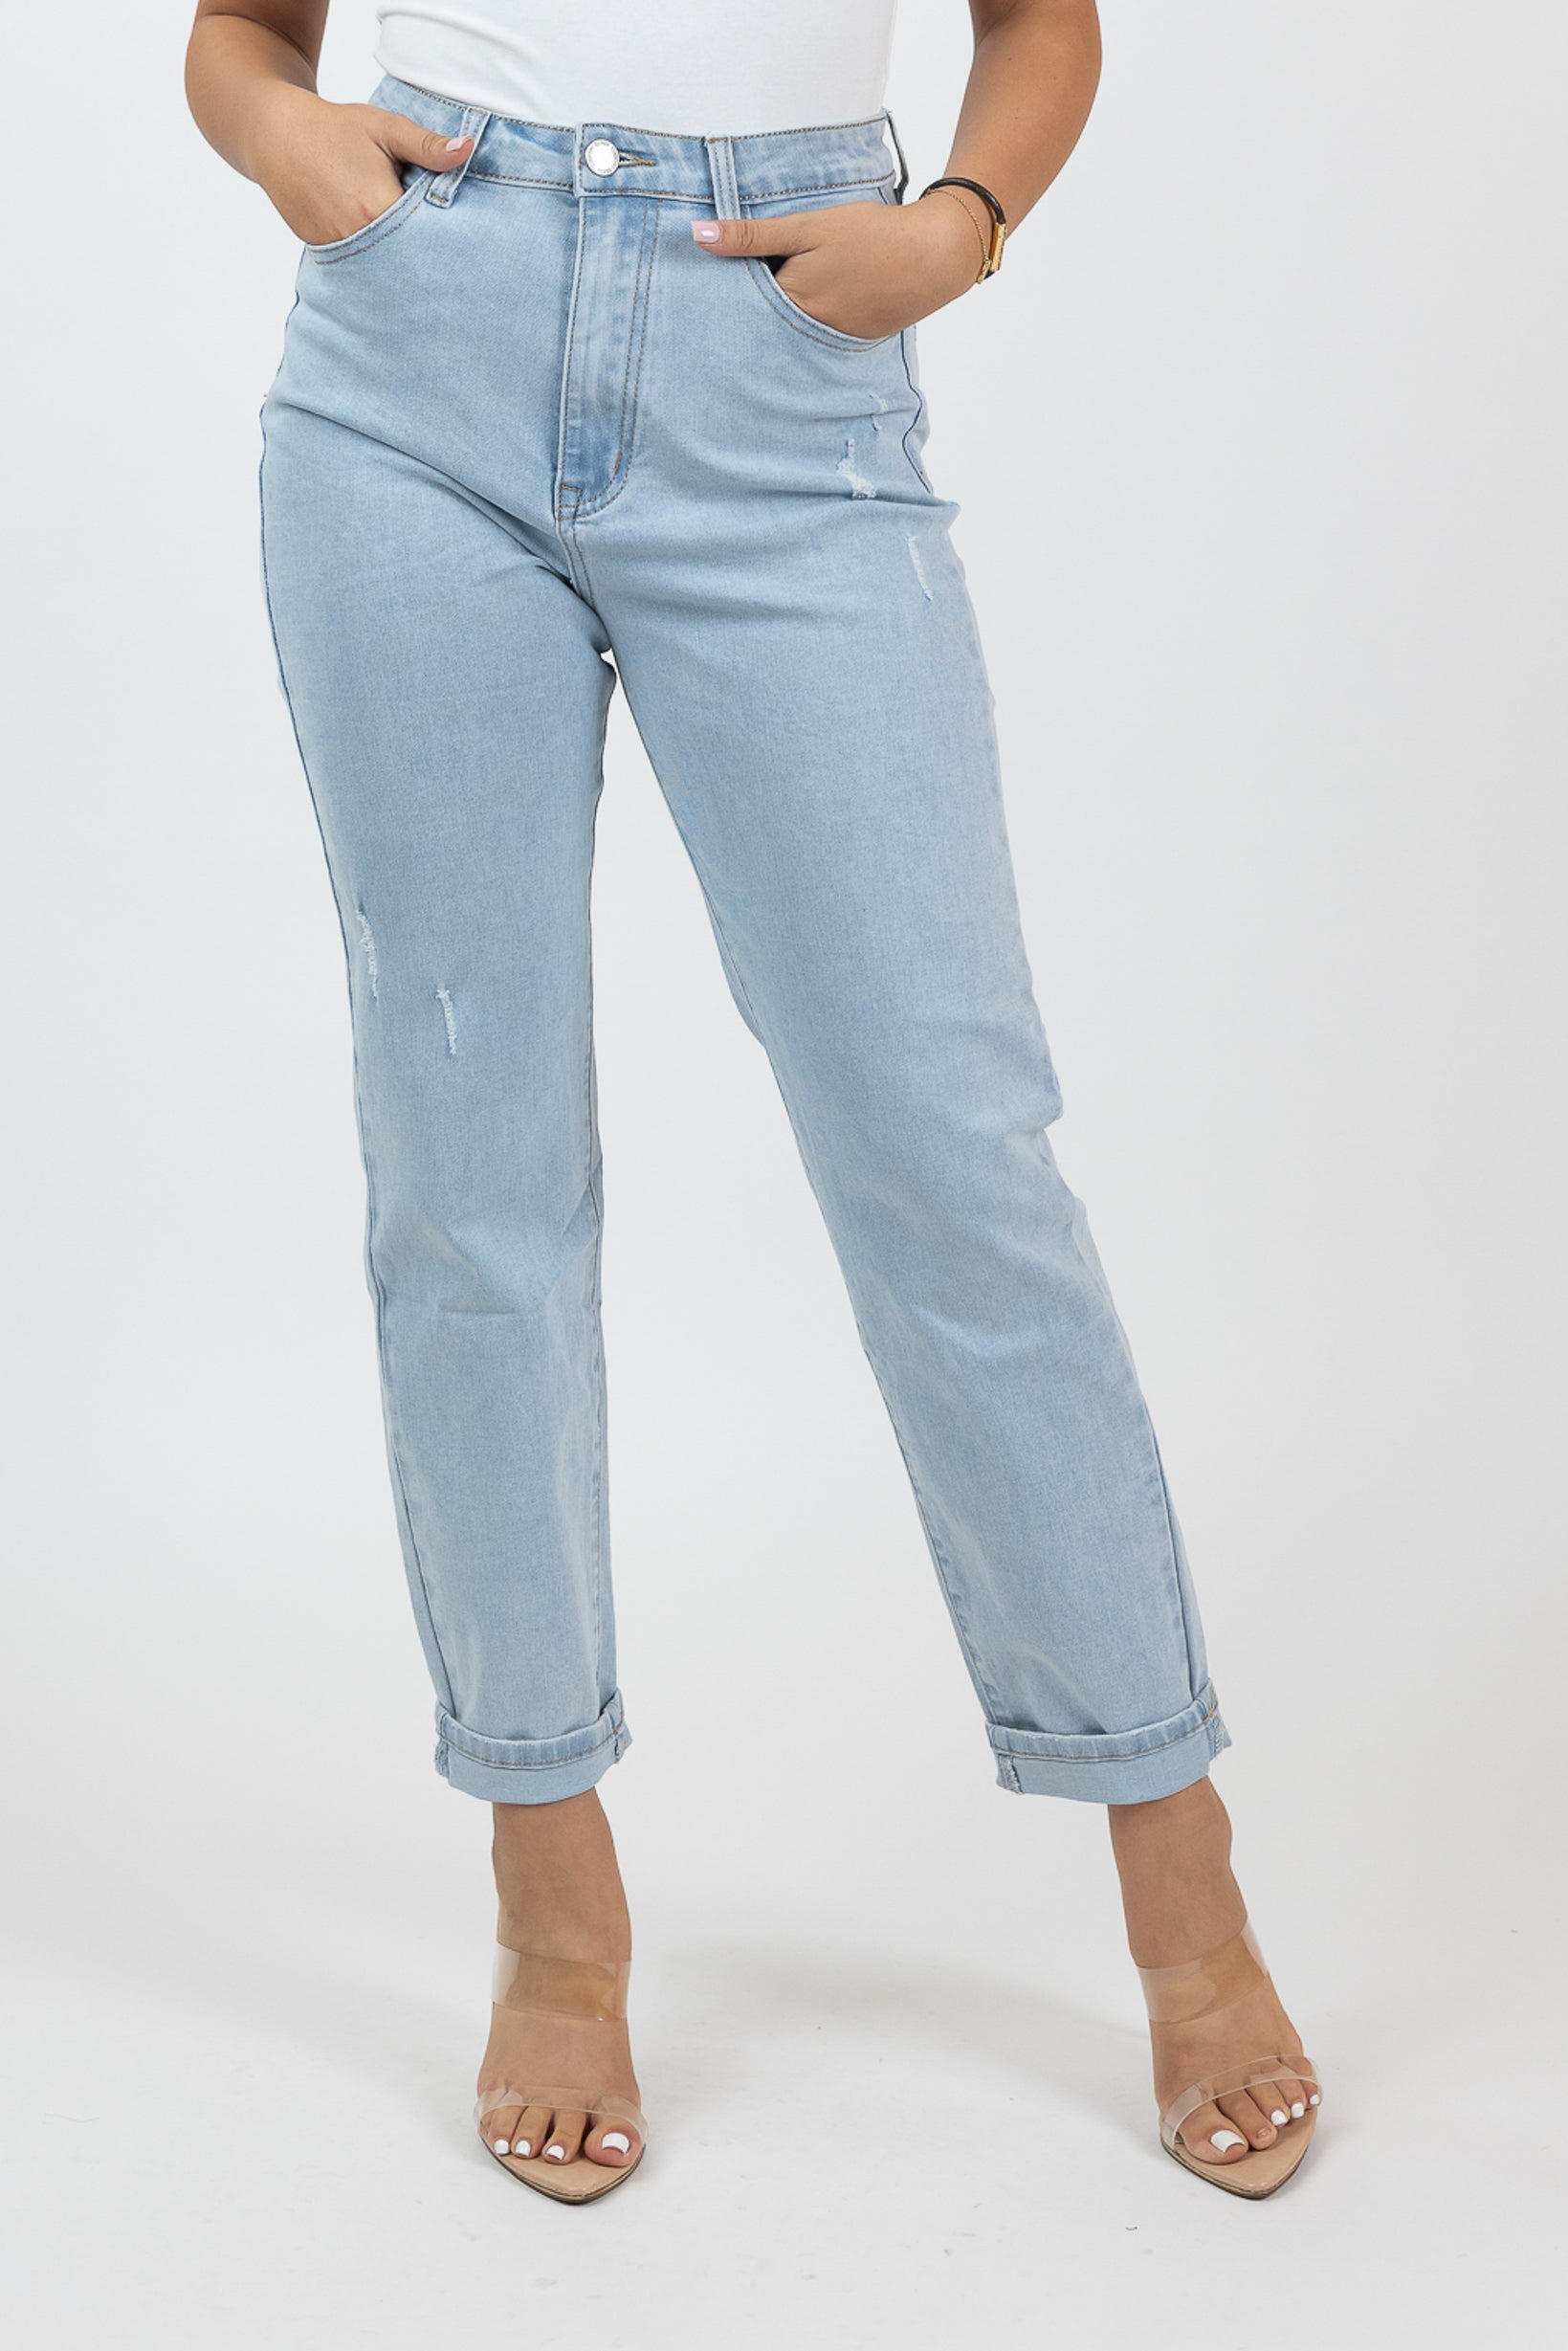 CGJ1590-denim-jeans